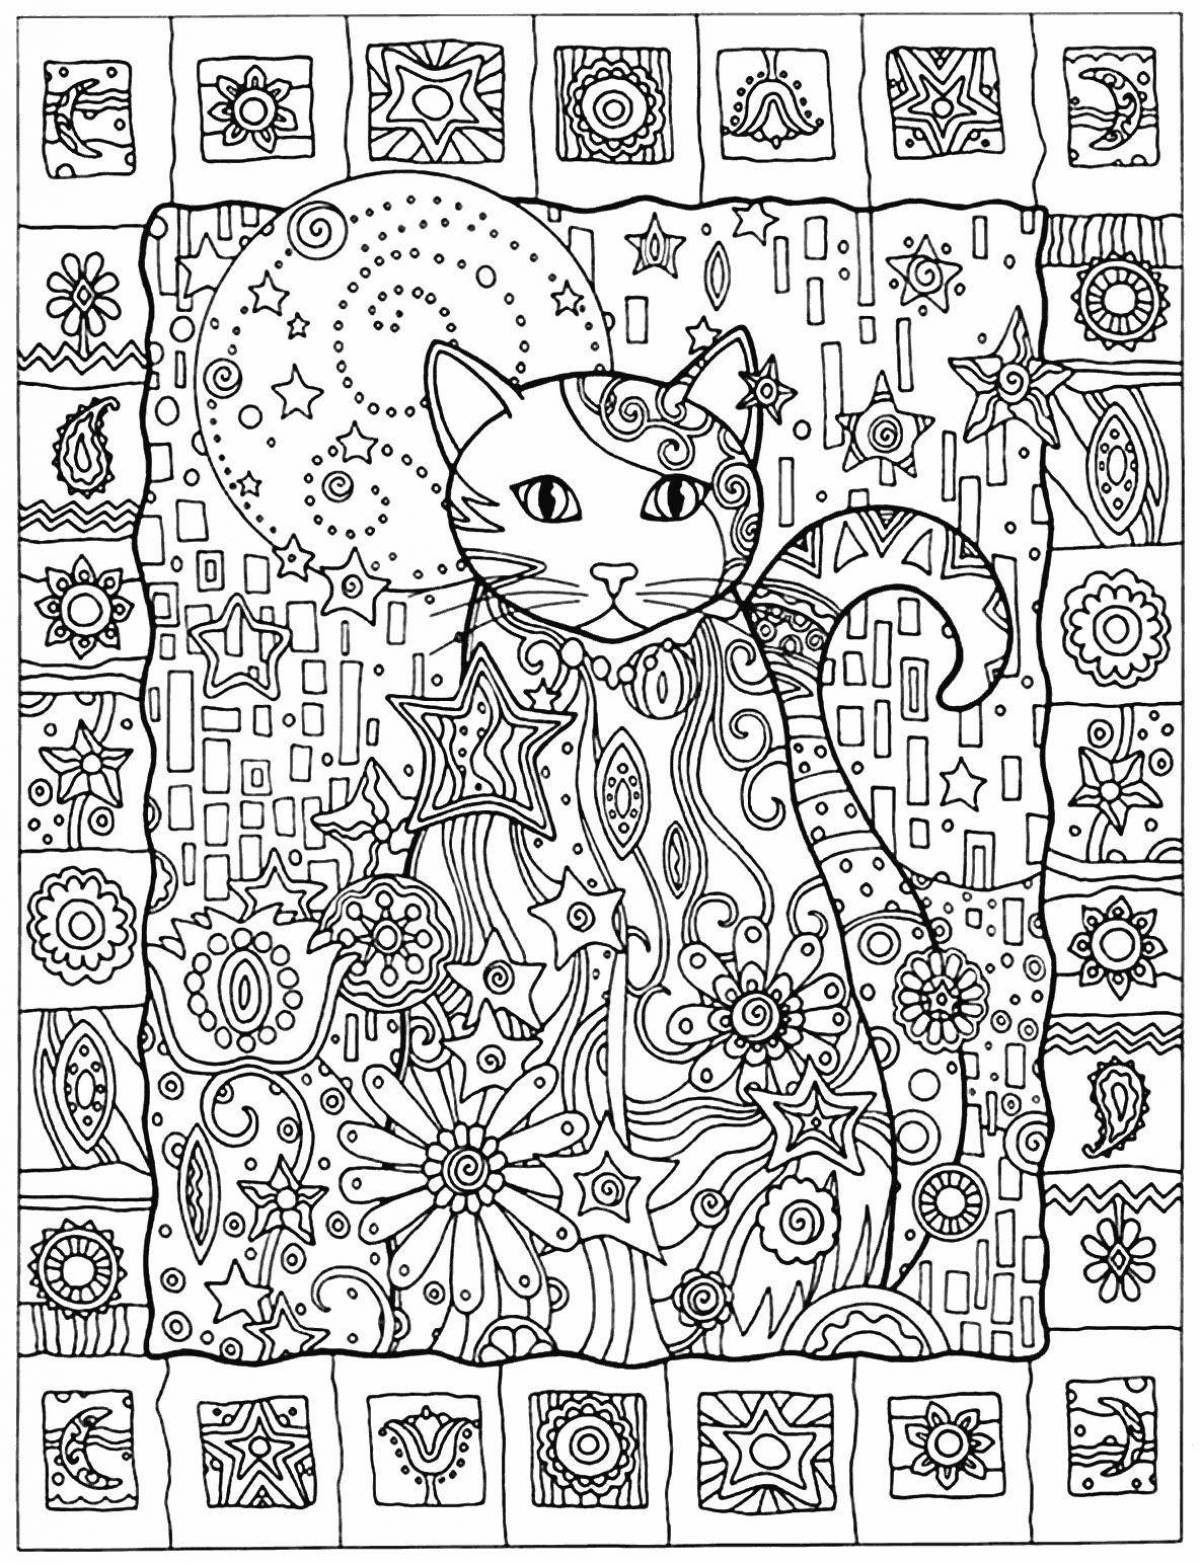 Joyful coloring complex cat